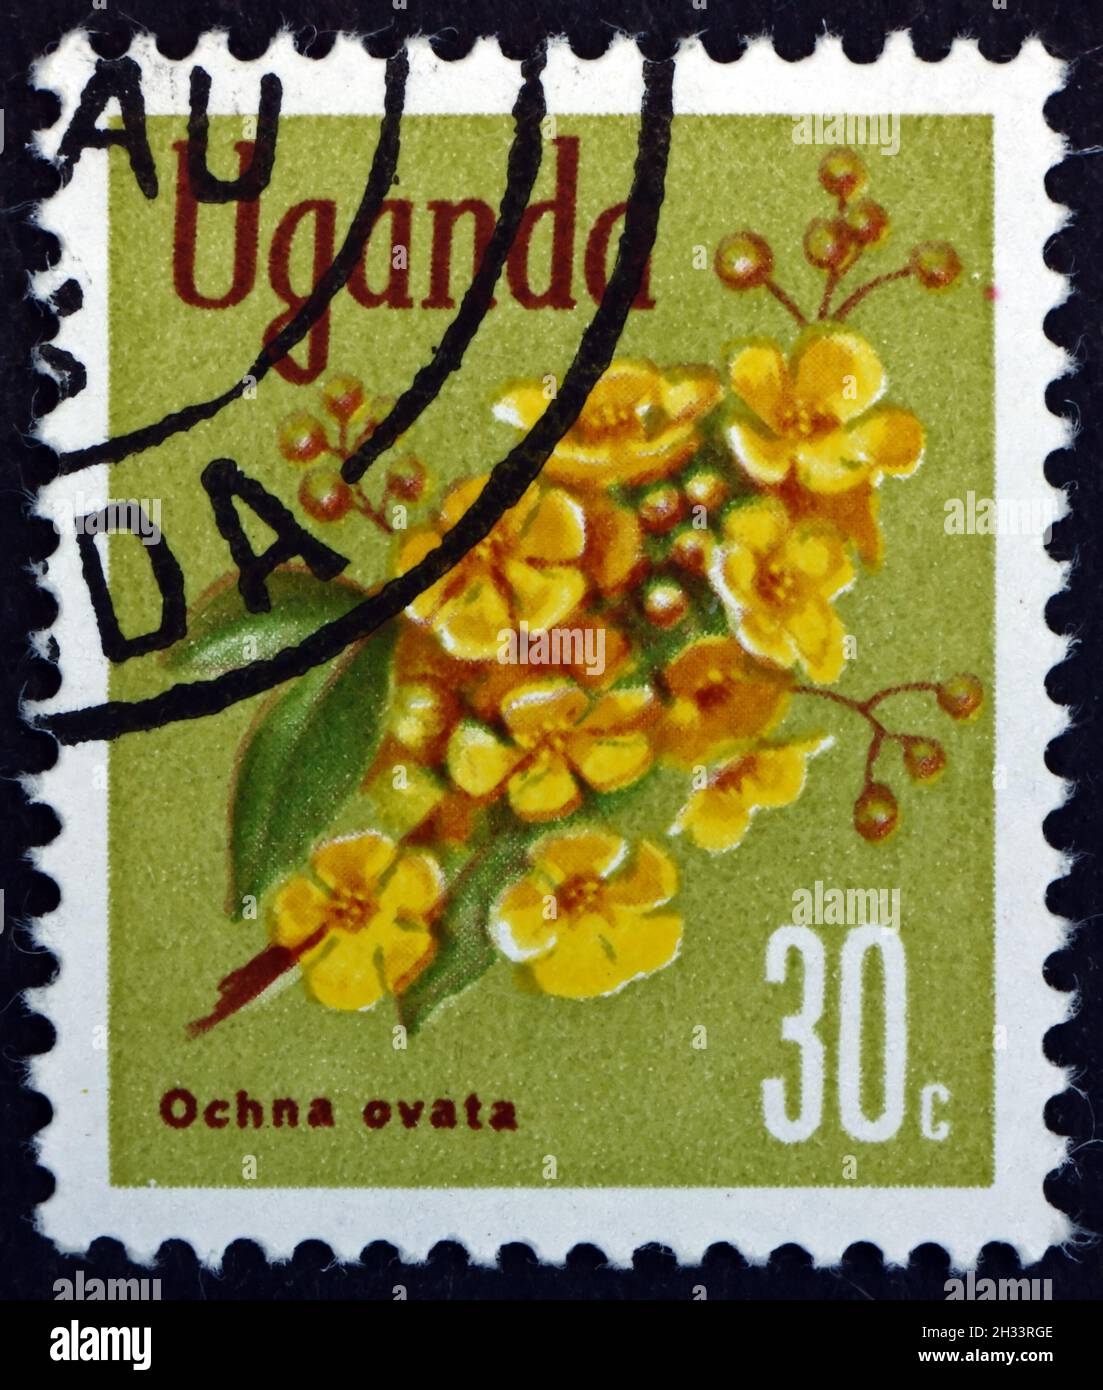 UGANDA - CIRCA 1969: a stamp printed in Uganda shows Ochna Ovata, Tropical Evergreen Tree, circa 1969 Stock Photo